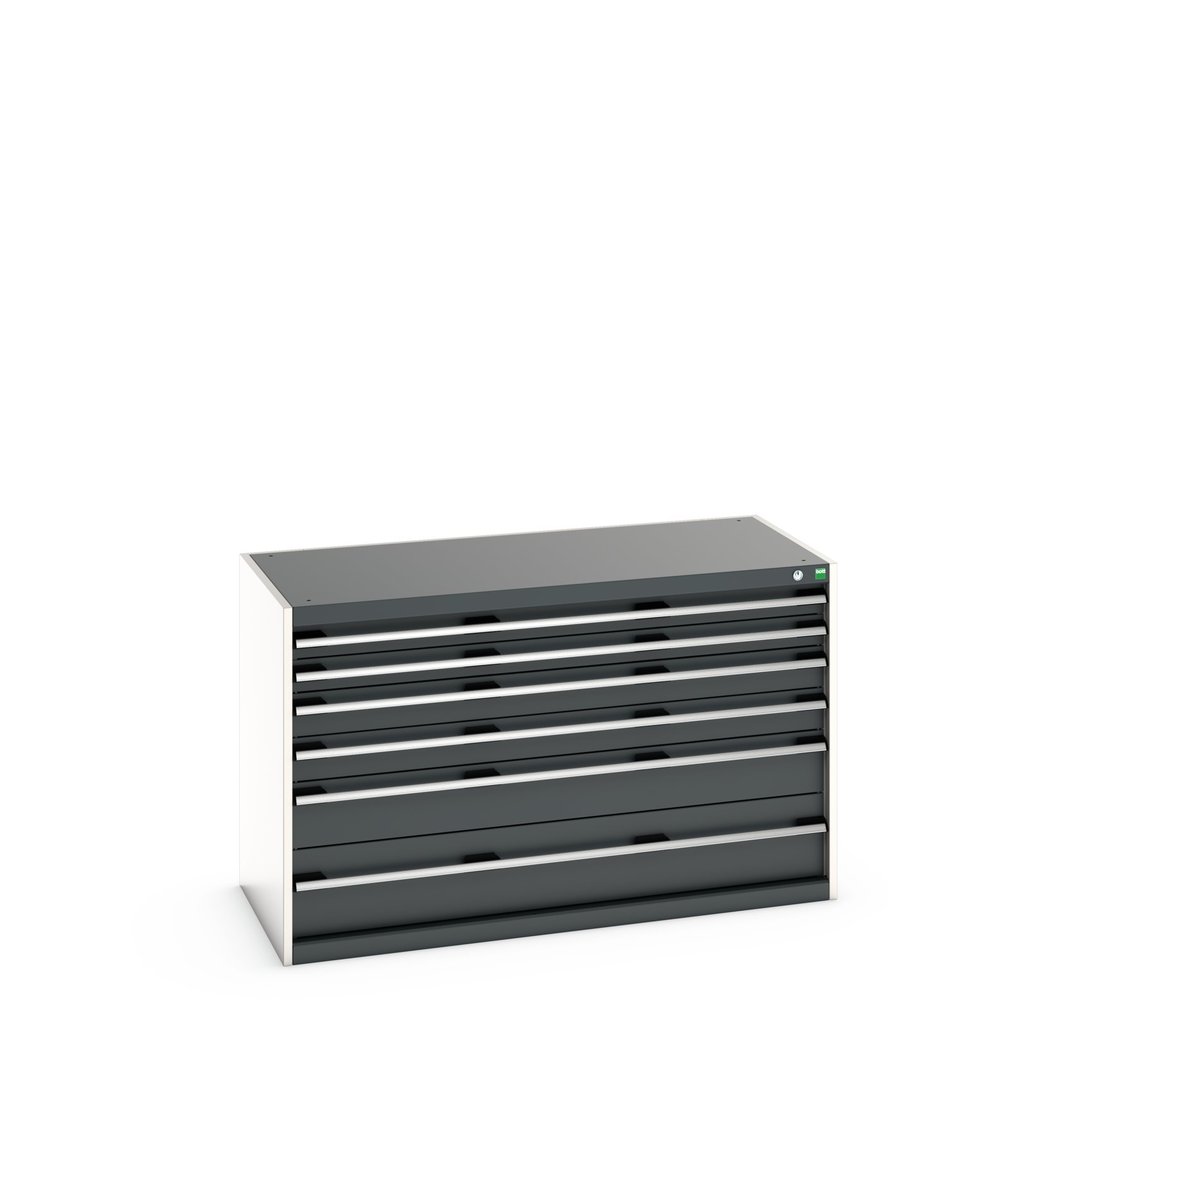 40022110. - cubio drawer cabinet